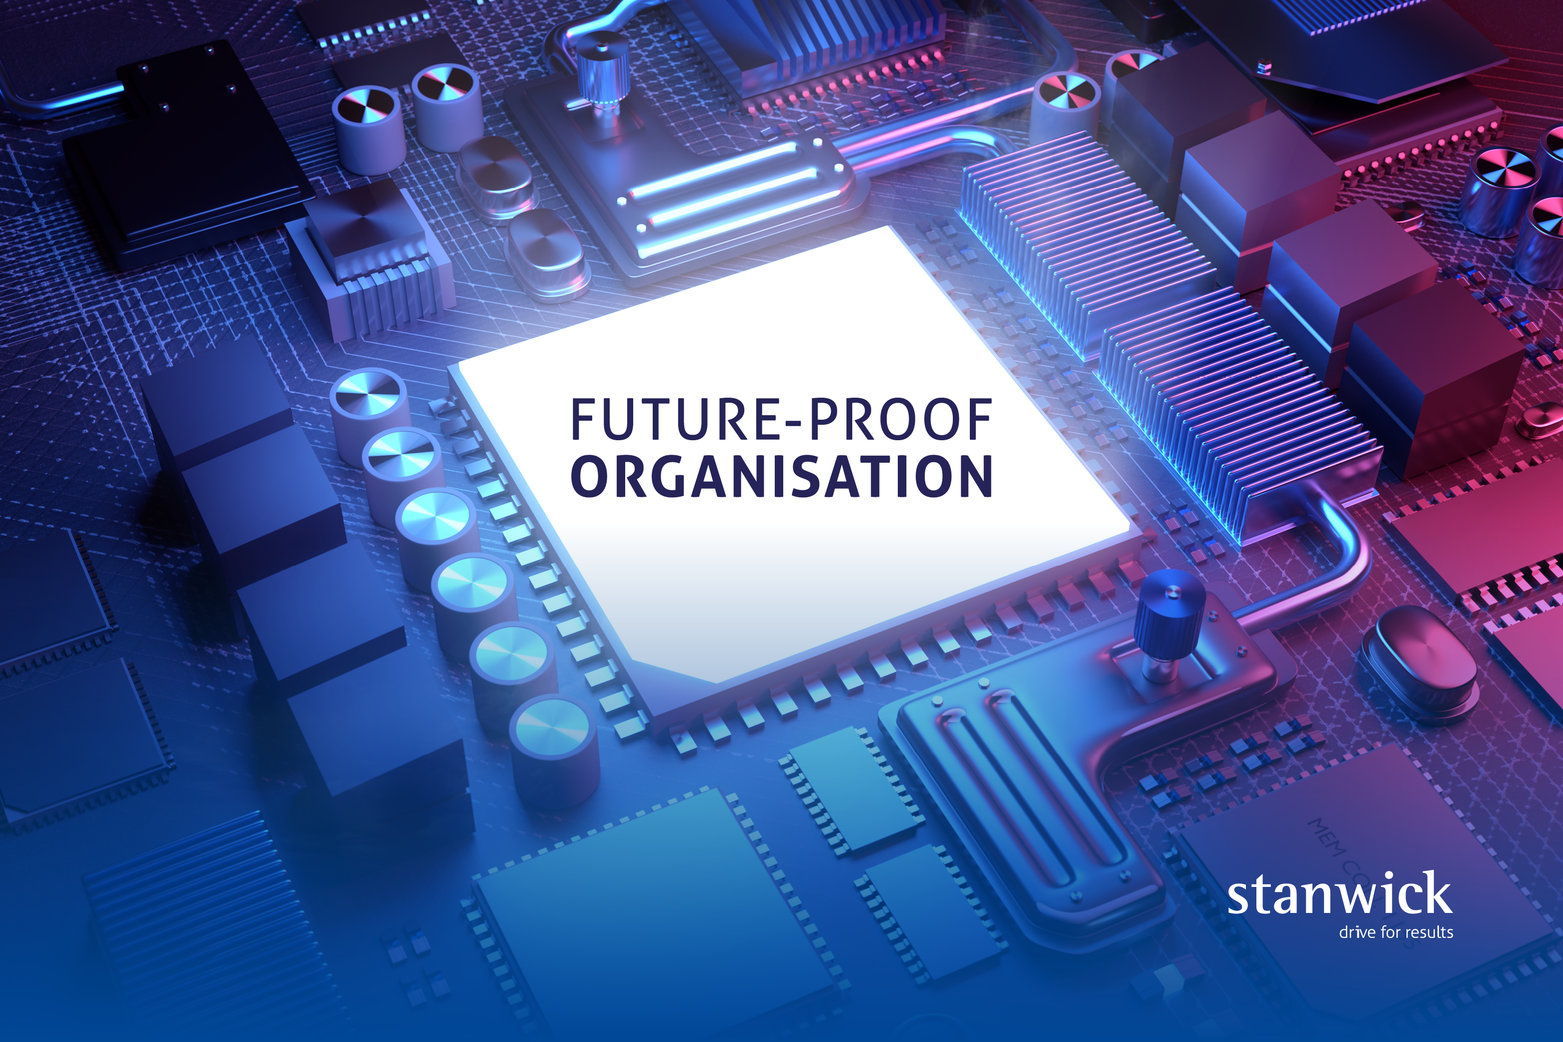 Stanwick - future-proof organisation